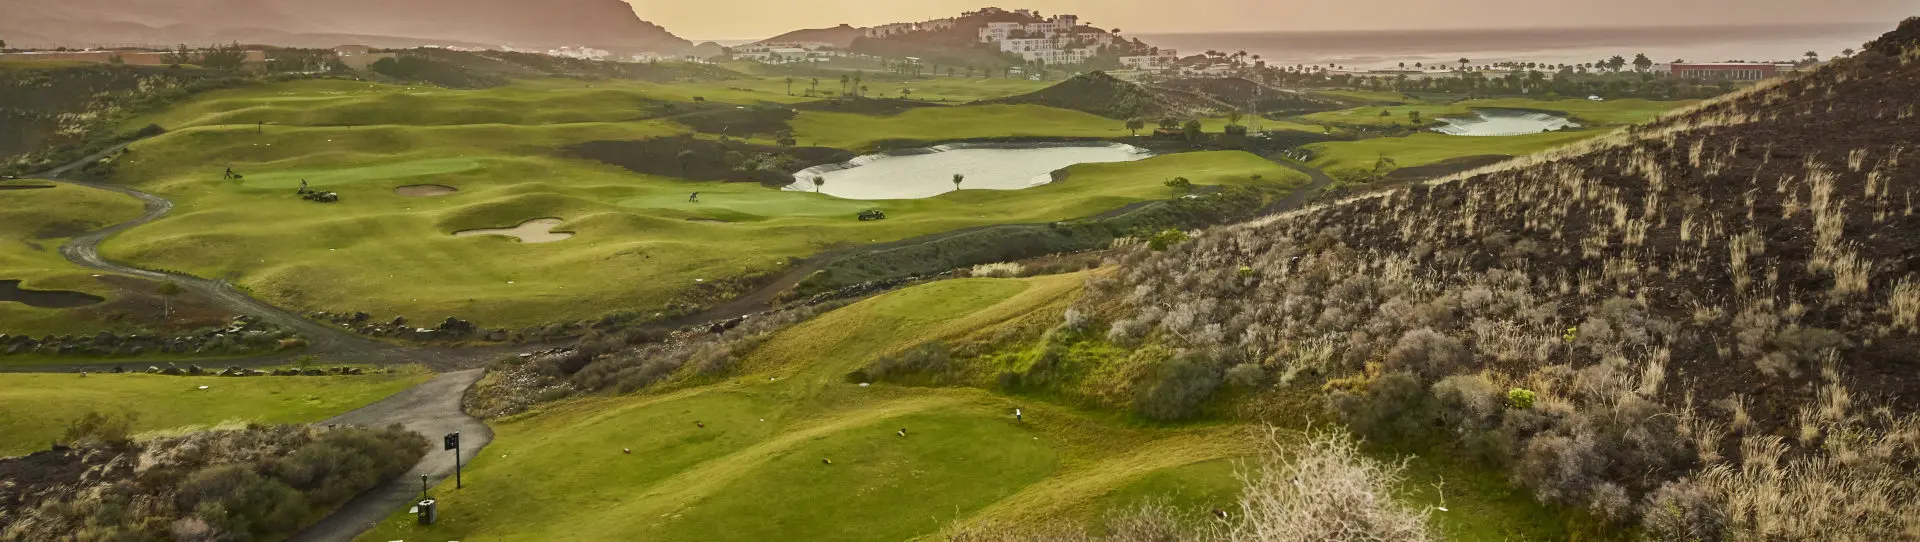 Spain Golf Driving Range - Golf Course Playitas - Photo 3